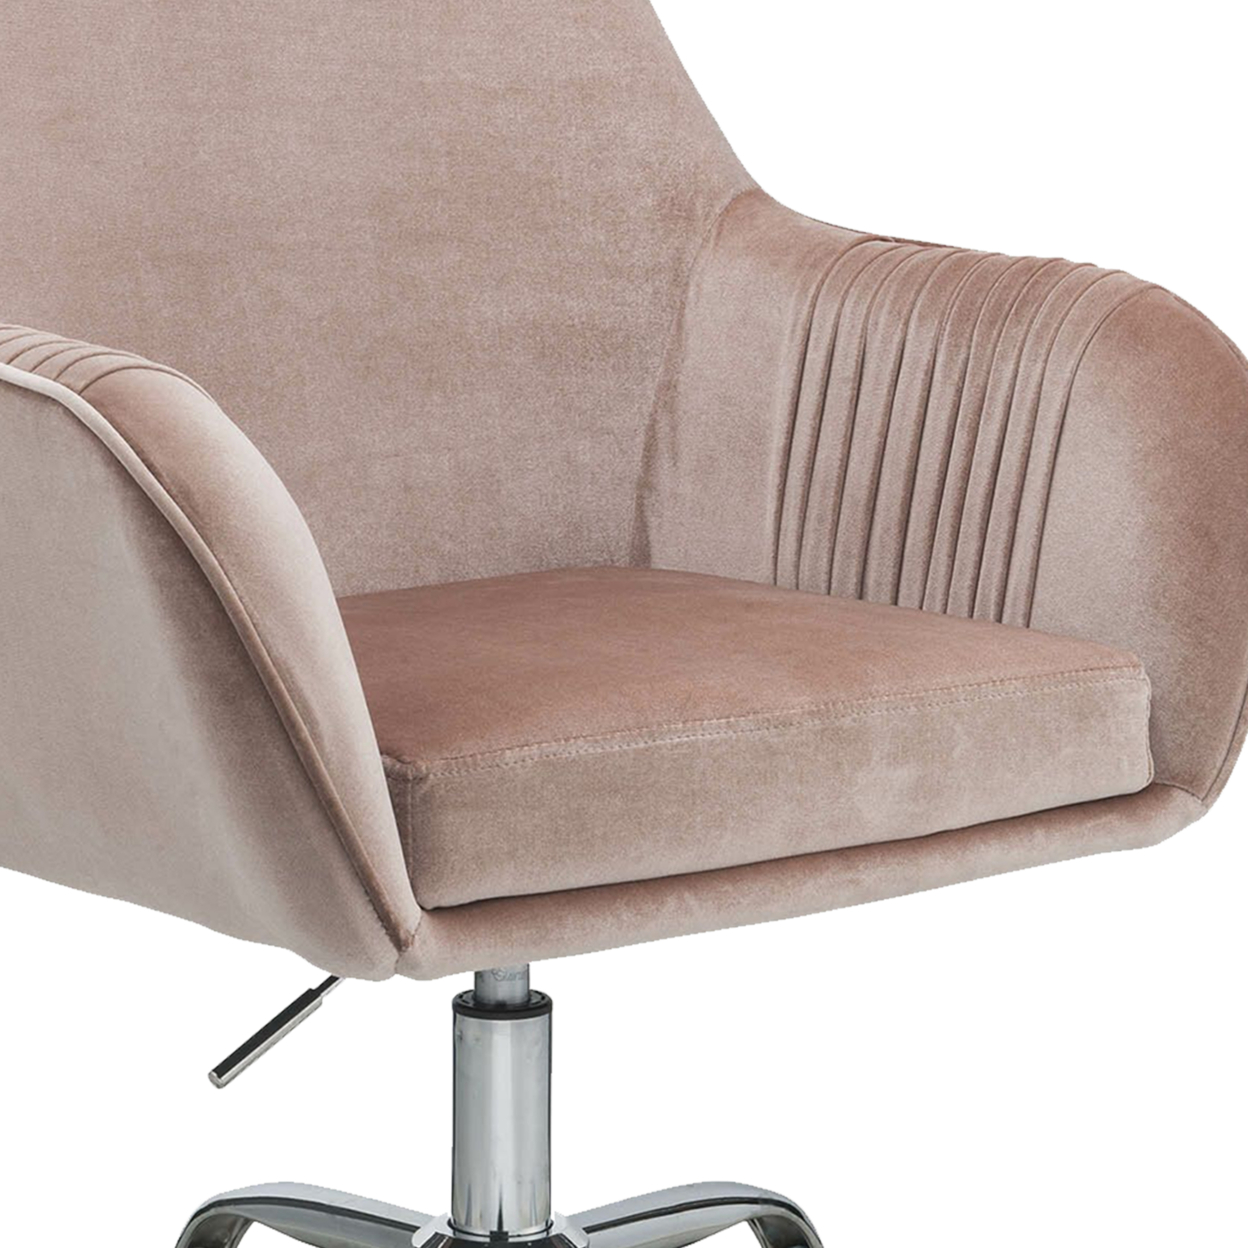 Adjustable Velvet Upholstered Swivel Office Chair With Slopped Armrests, Pink And Silver- Saltoro Sherpi